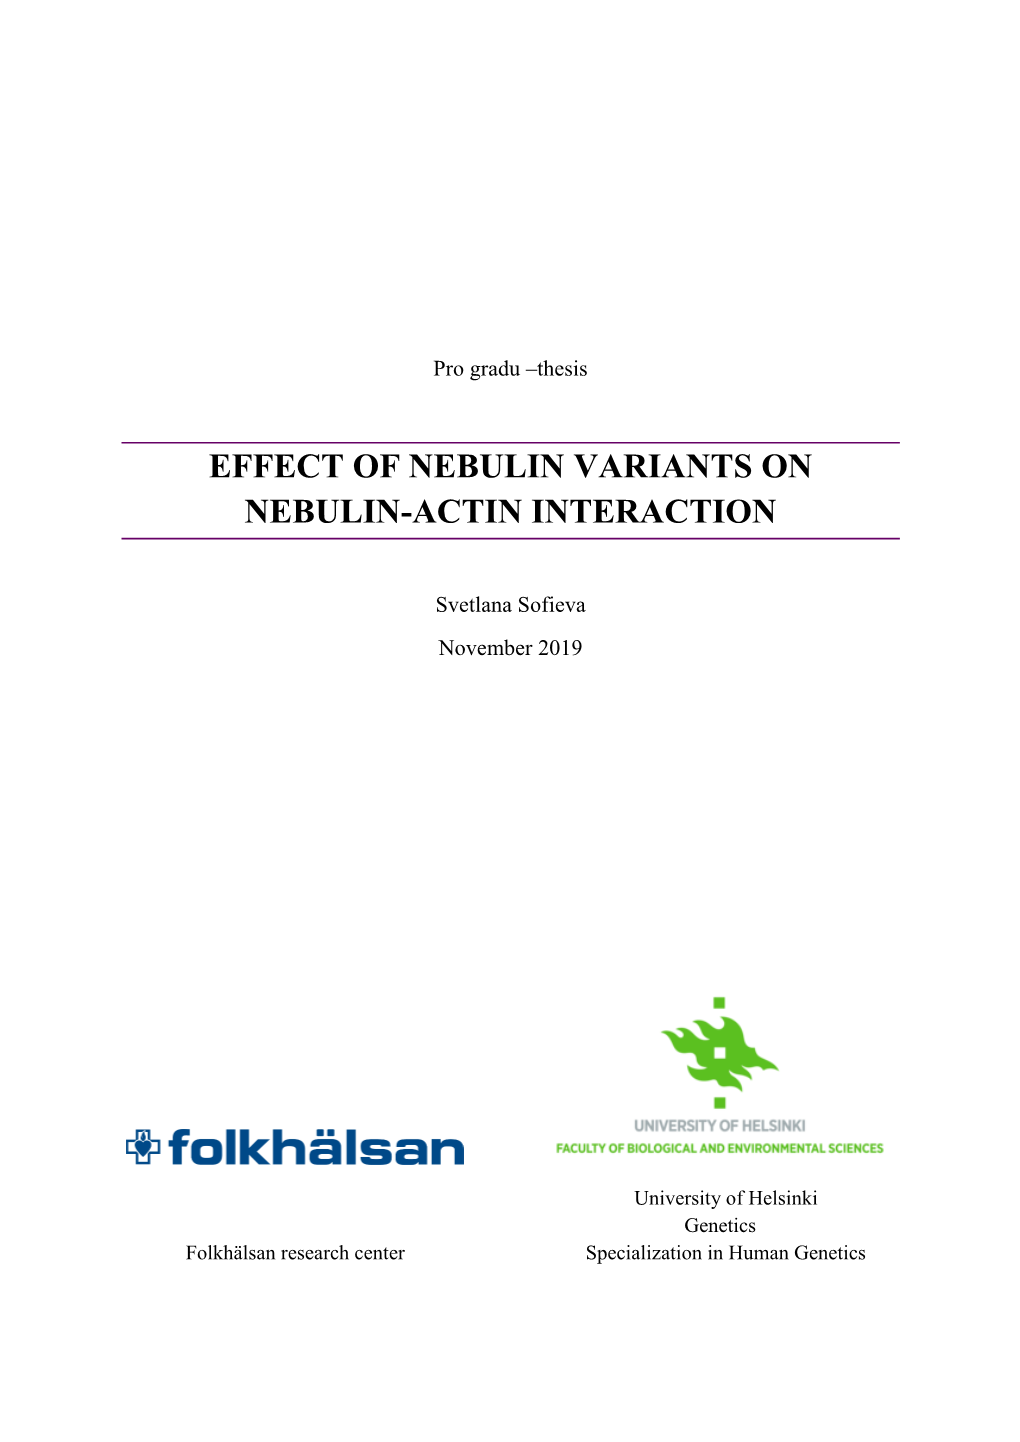 Effect of Nebulin Variants on Nebulin-Actin Interaction